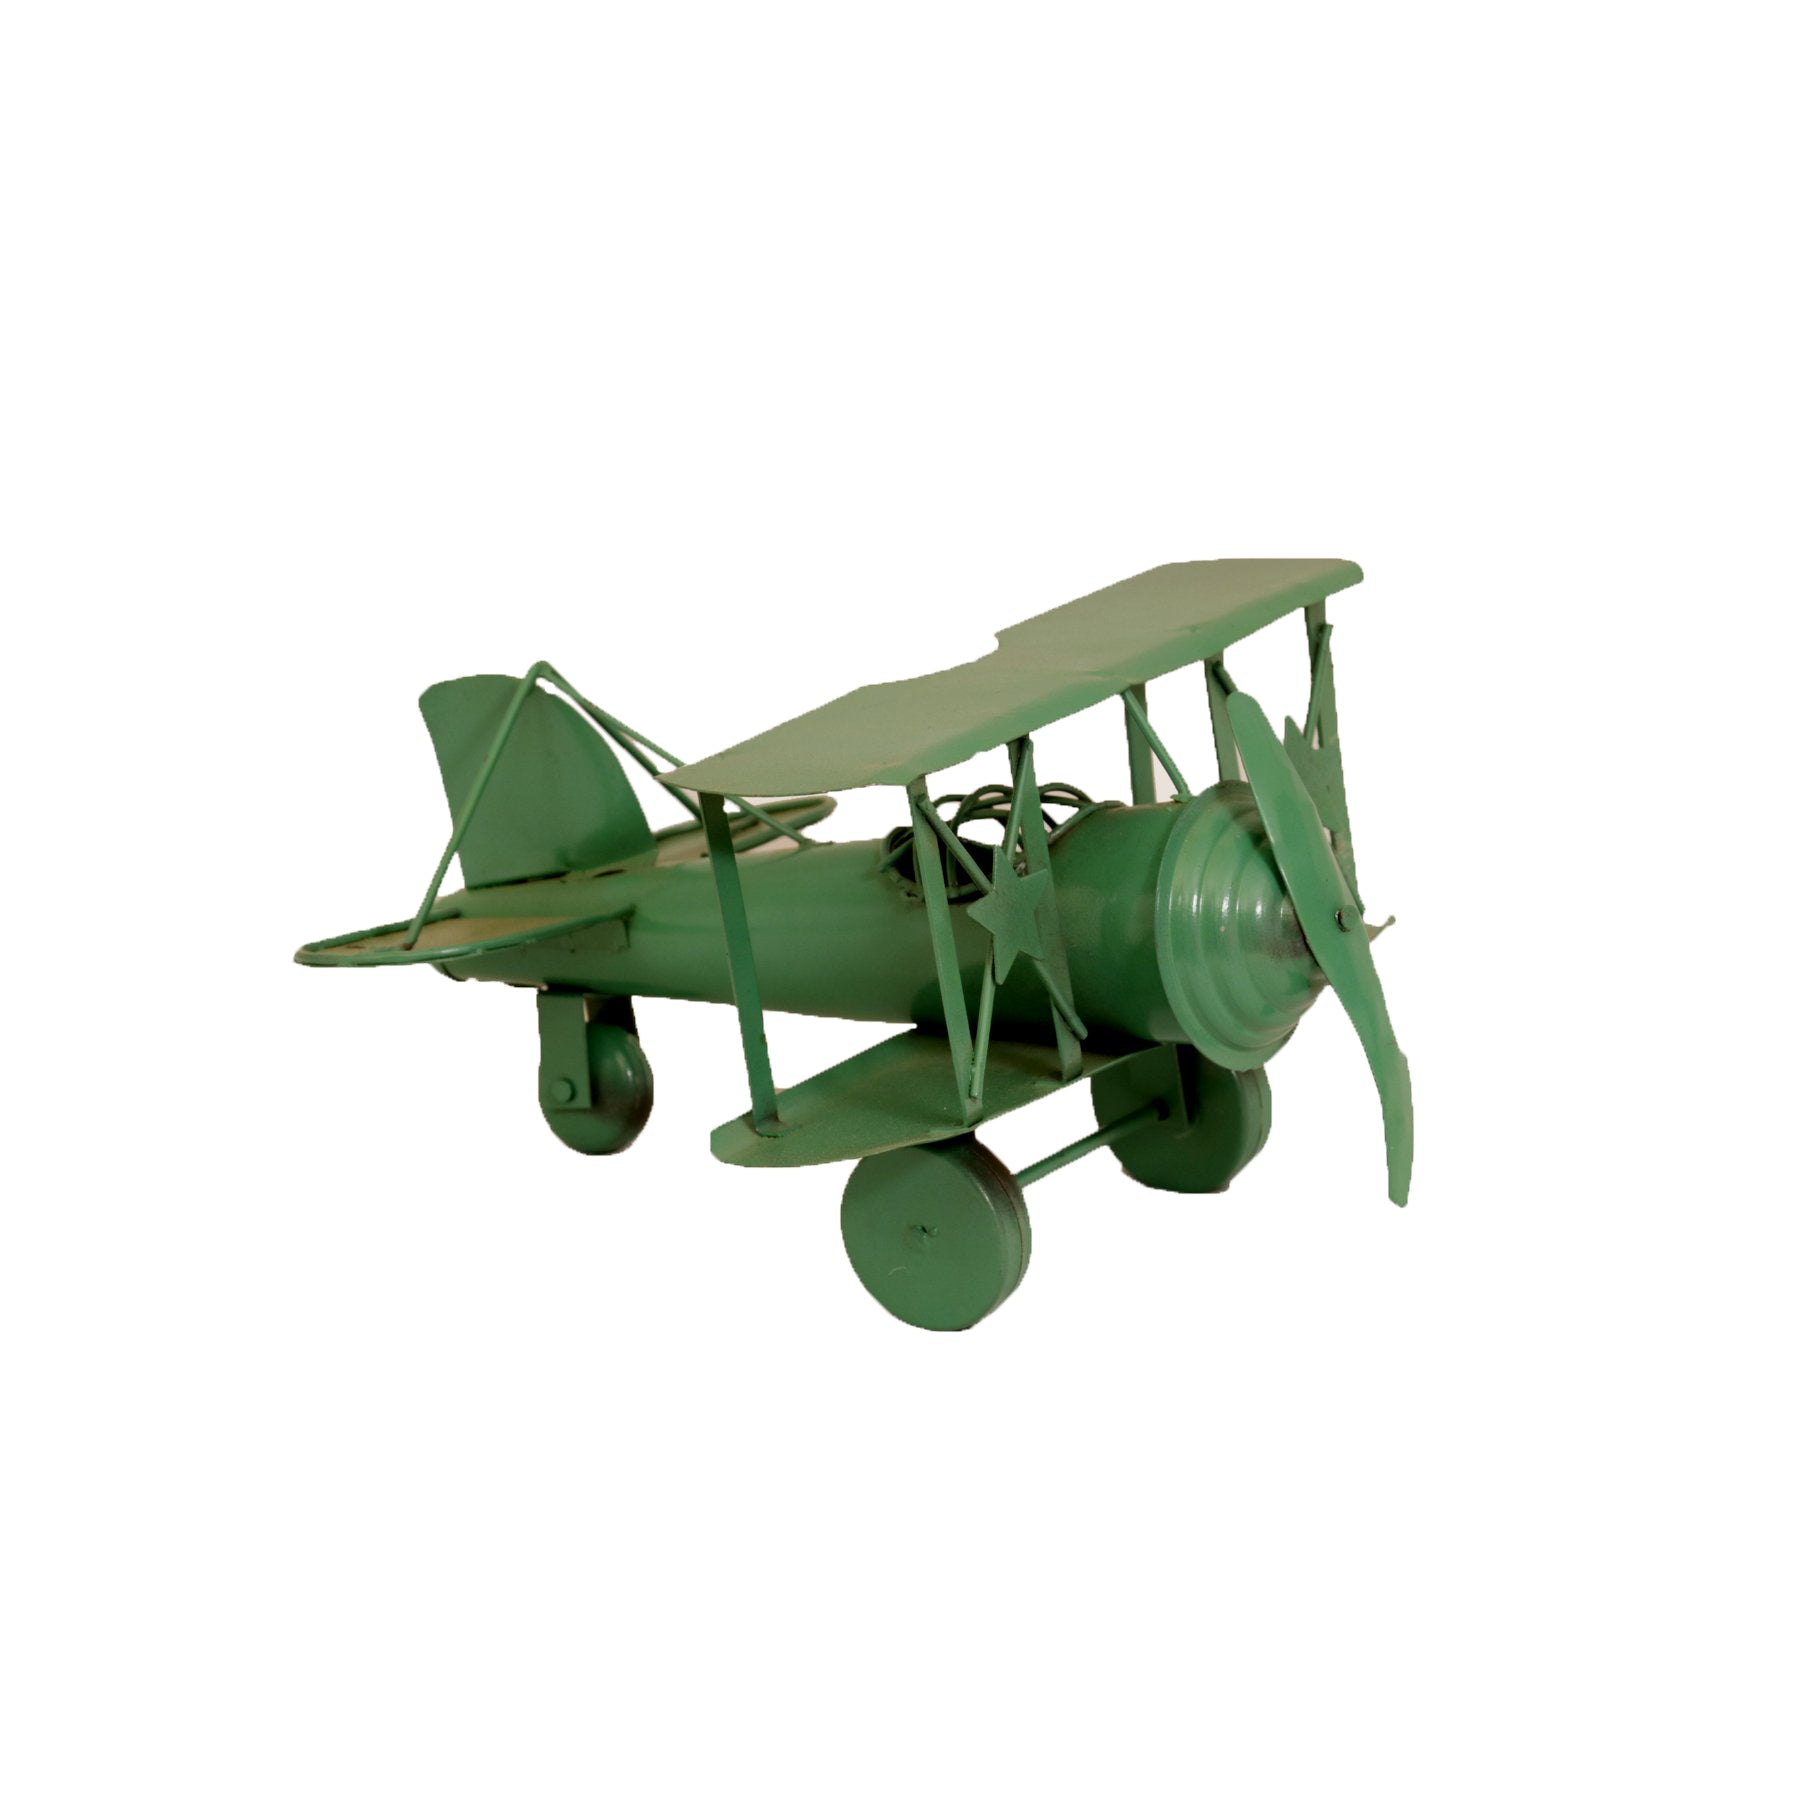 Green Fatigue Hued Plane Vehicle figurine